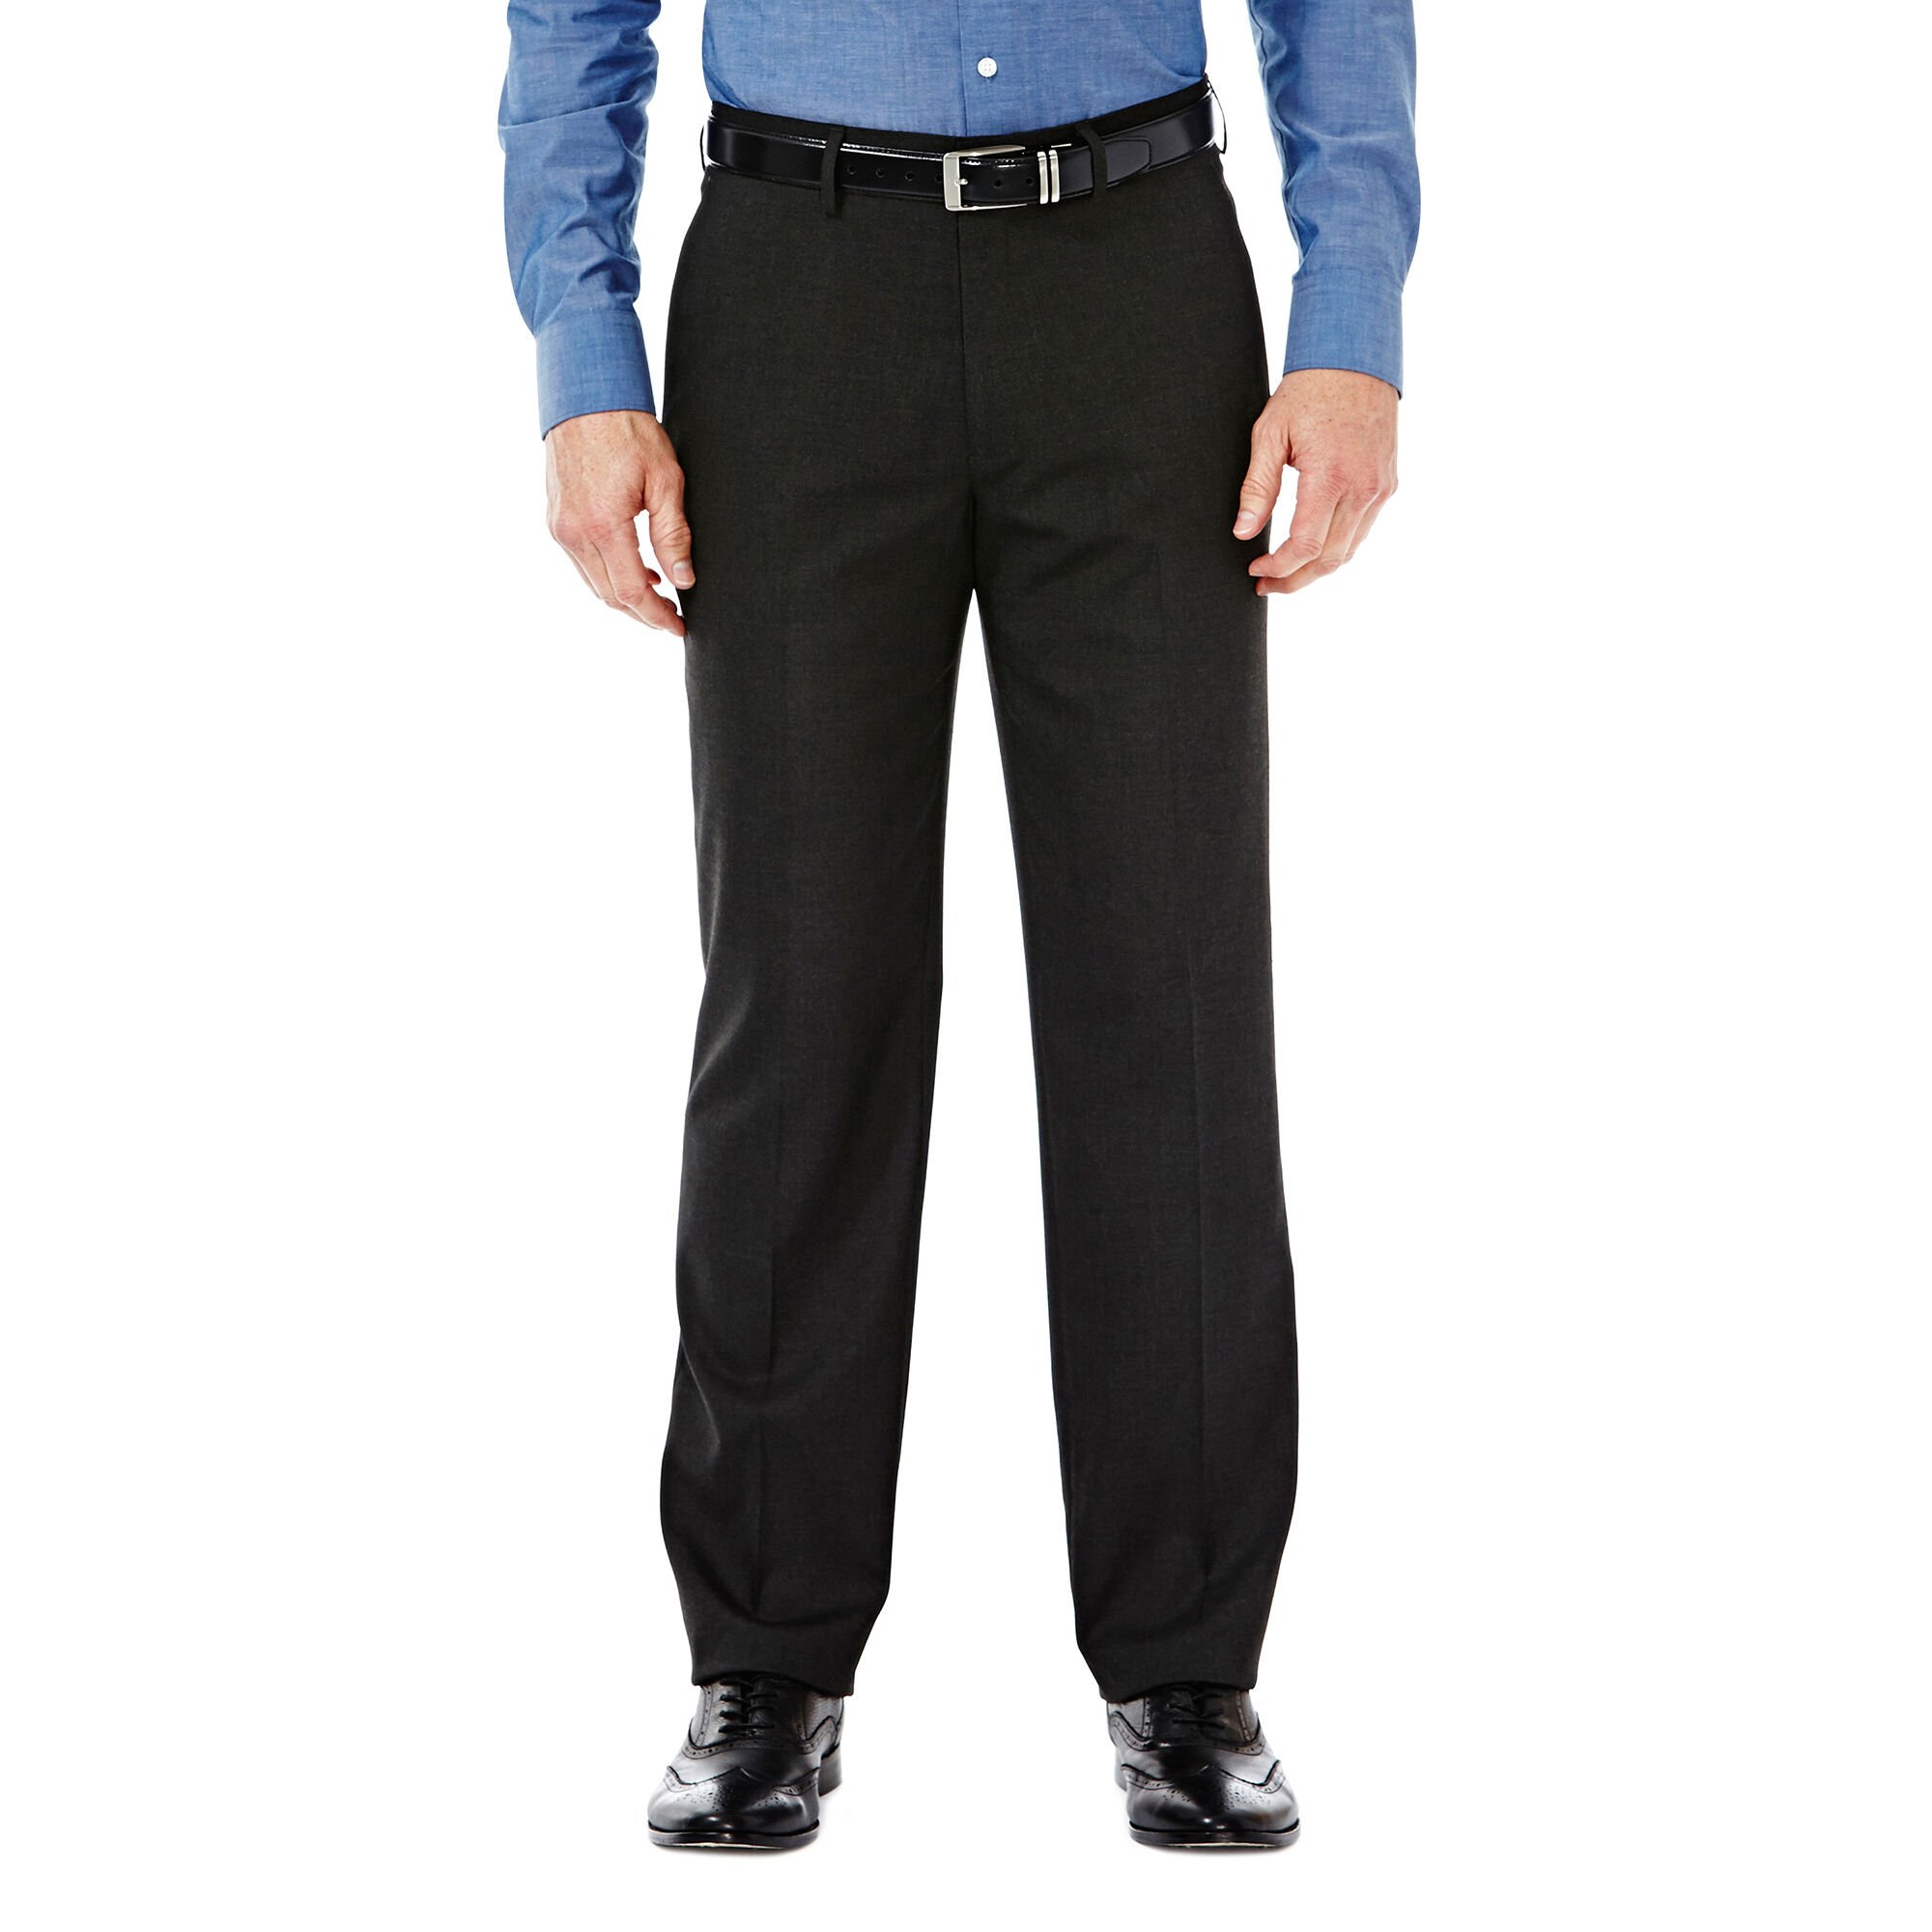 J.M. Haggar Premium Stretch Dress Slack Black / Charcoal (HD10885 Clothing Pants) photo